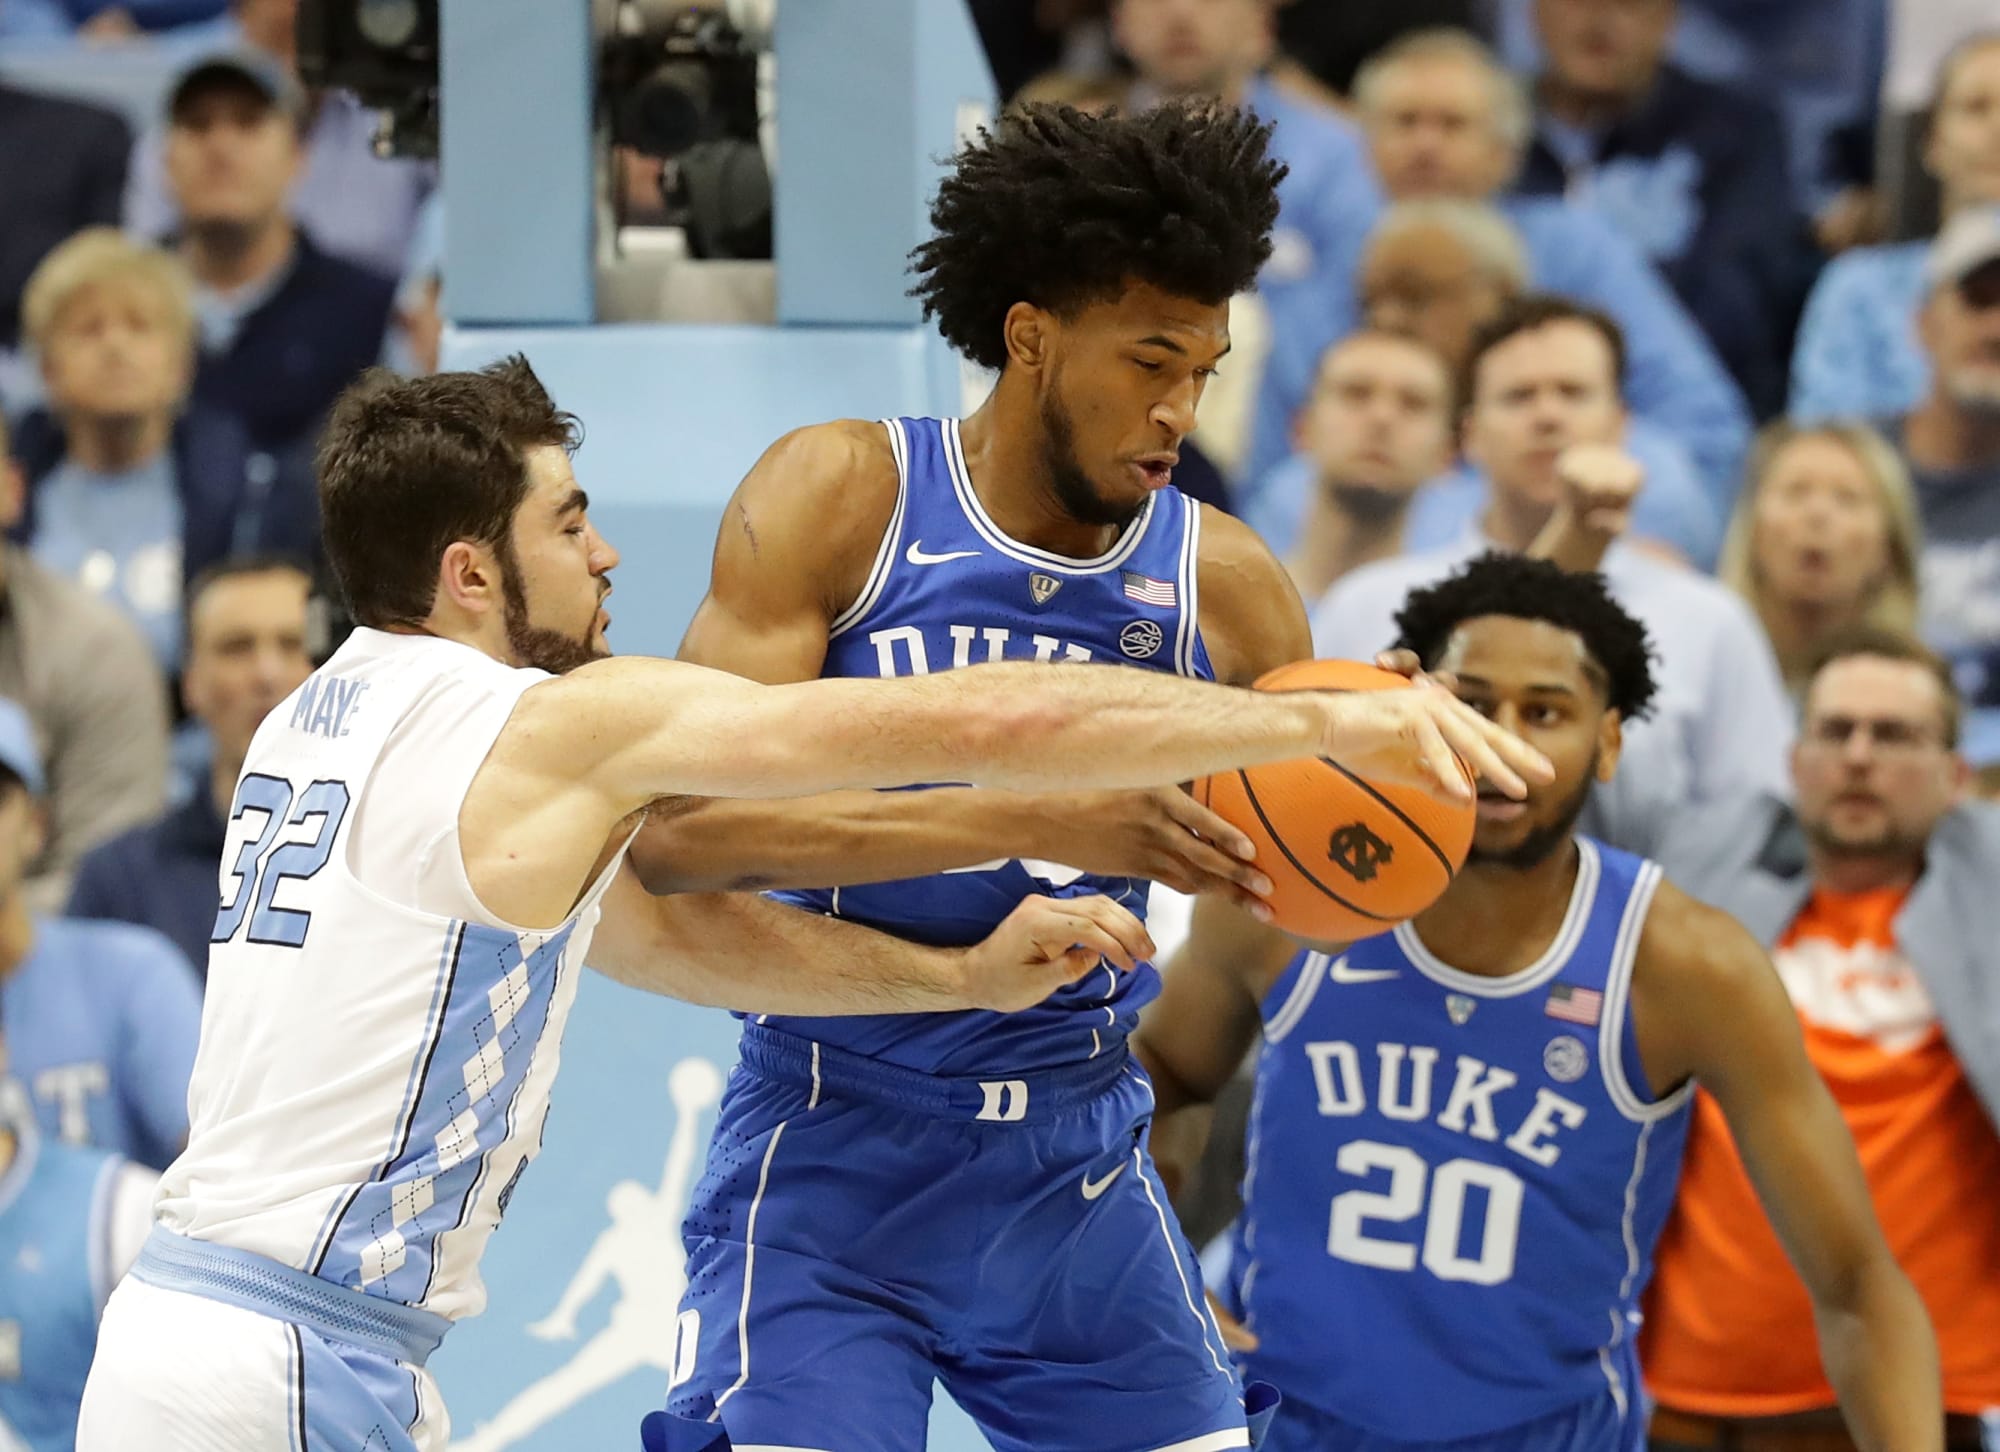 Duke vs. North Carolina College basketball game preview, TV schedule